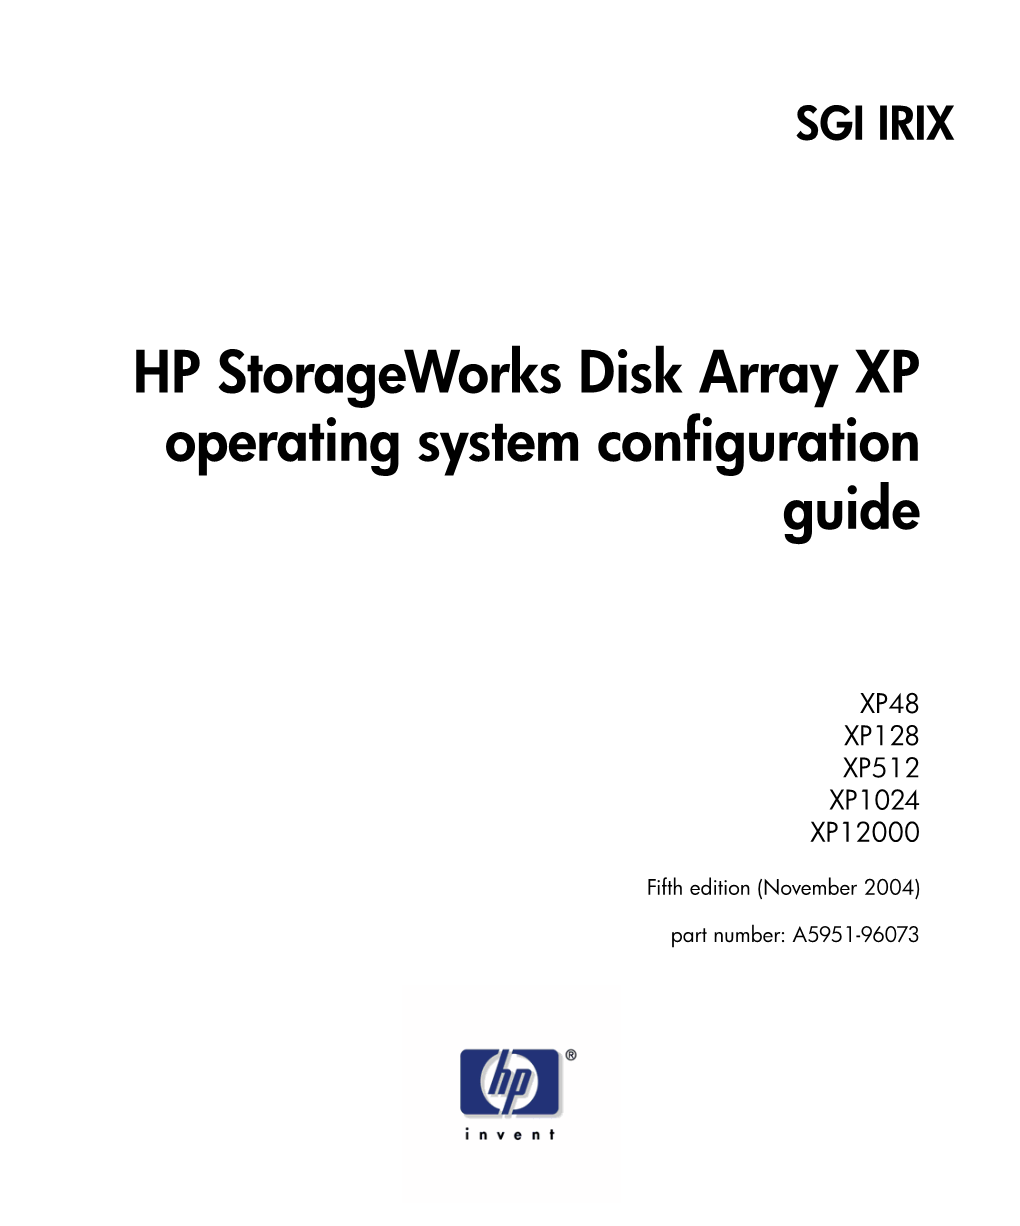 HP Storageworks Operating System Configuration Guide: SGI IRIX